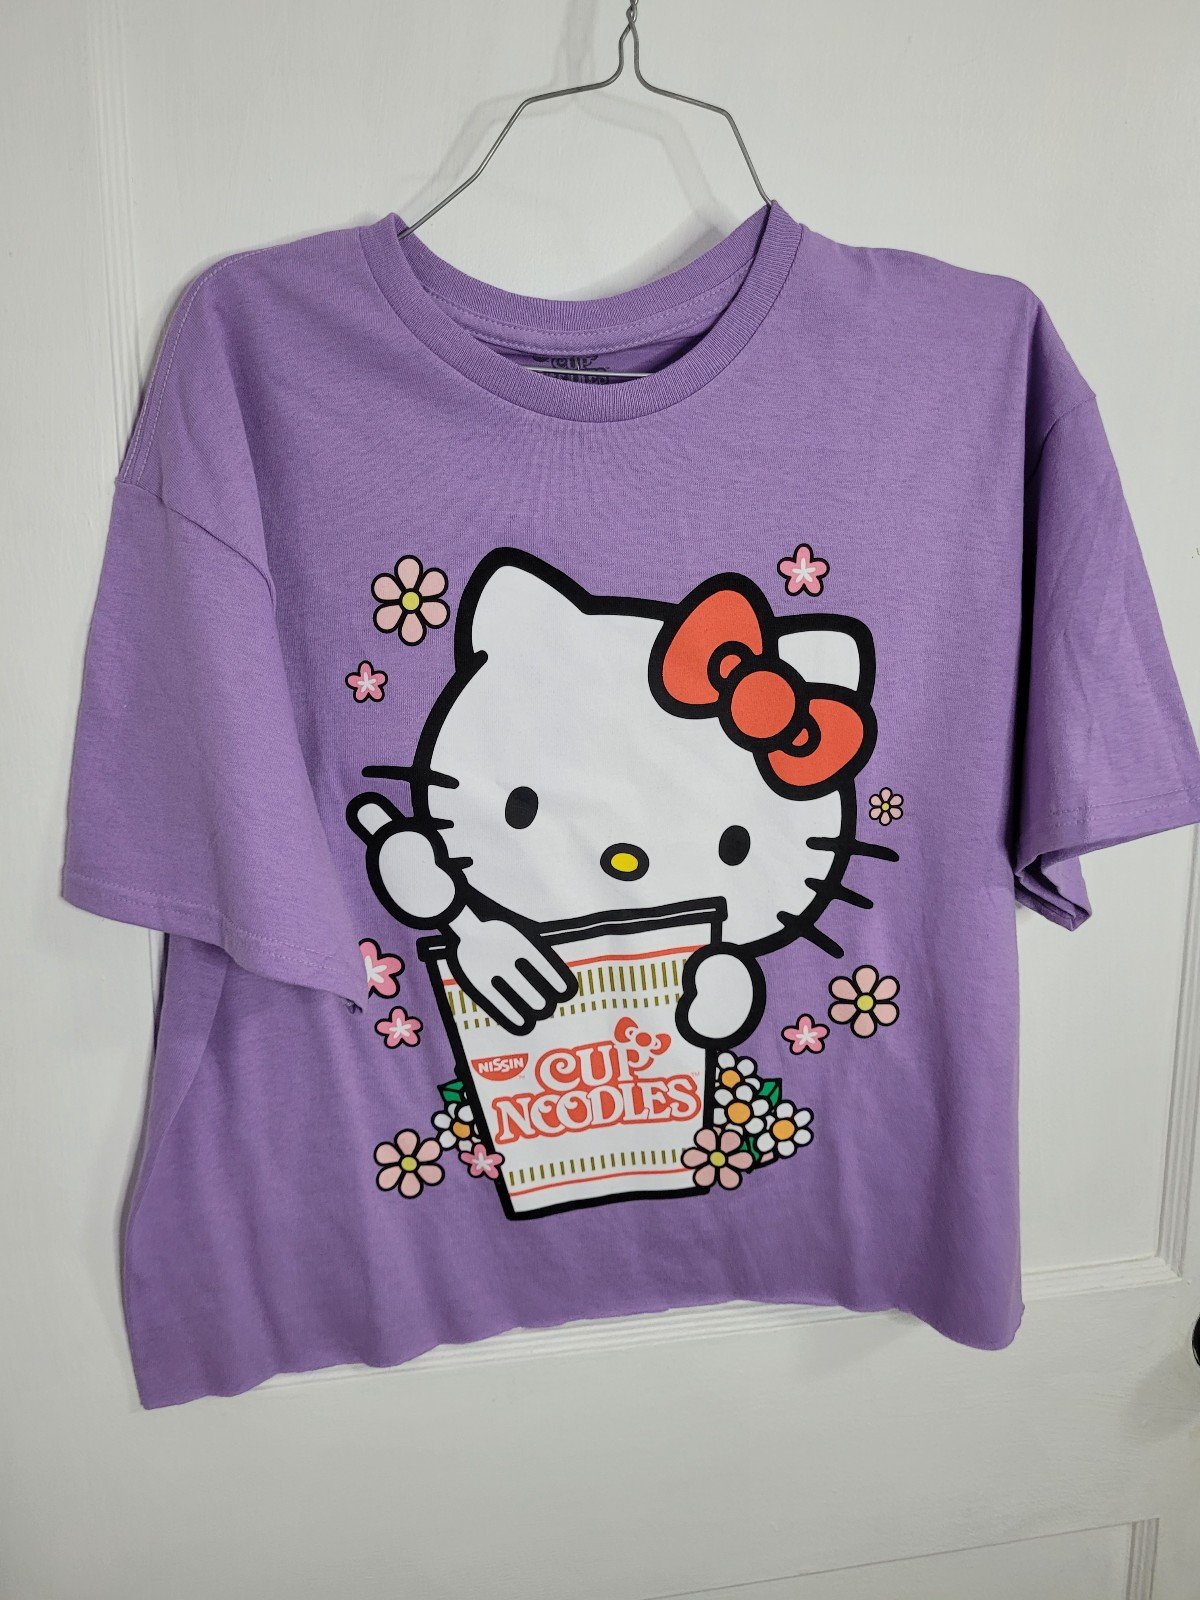 The Best Seller Womens hello kitty shirt Lbpw4slIB onli